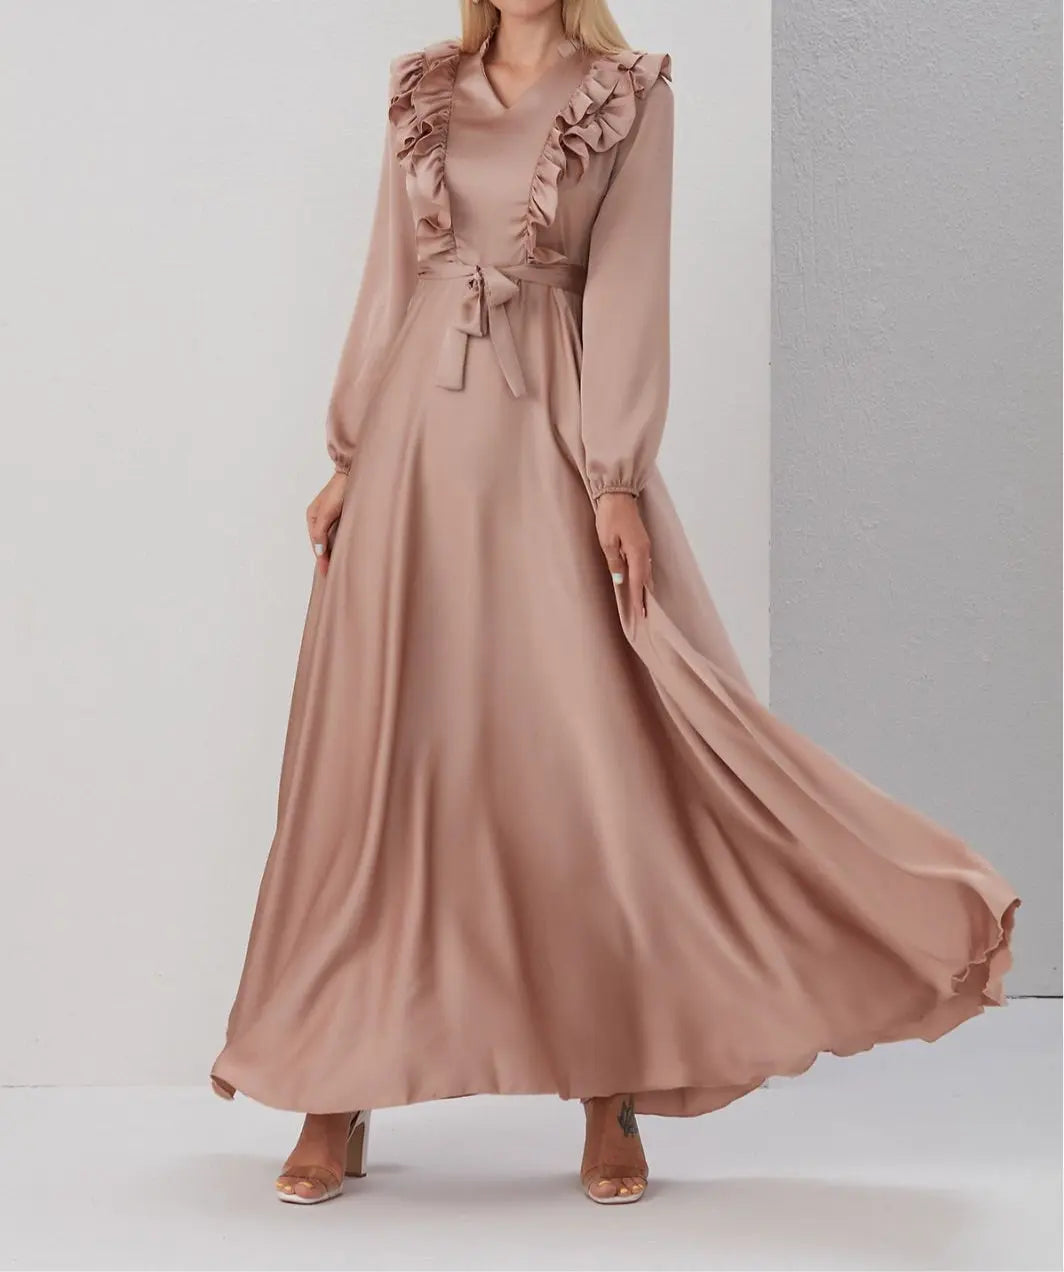 Nude Satin Ruffle Dress Hijabimama